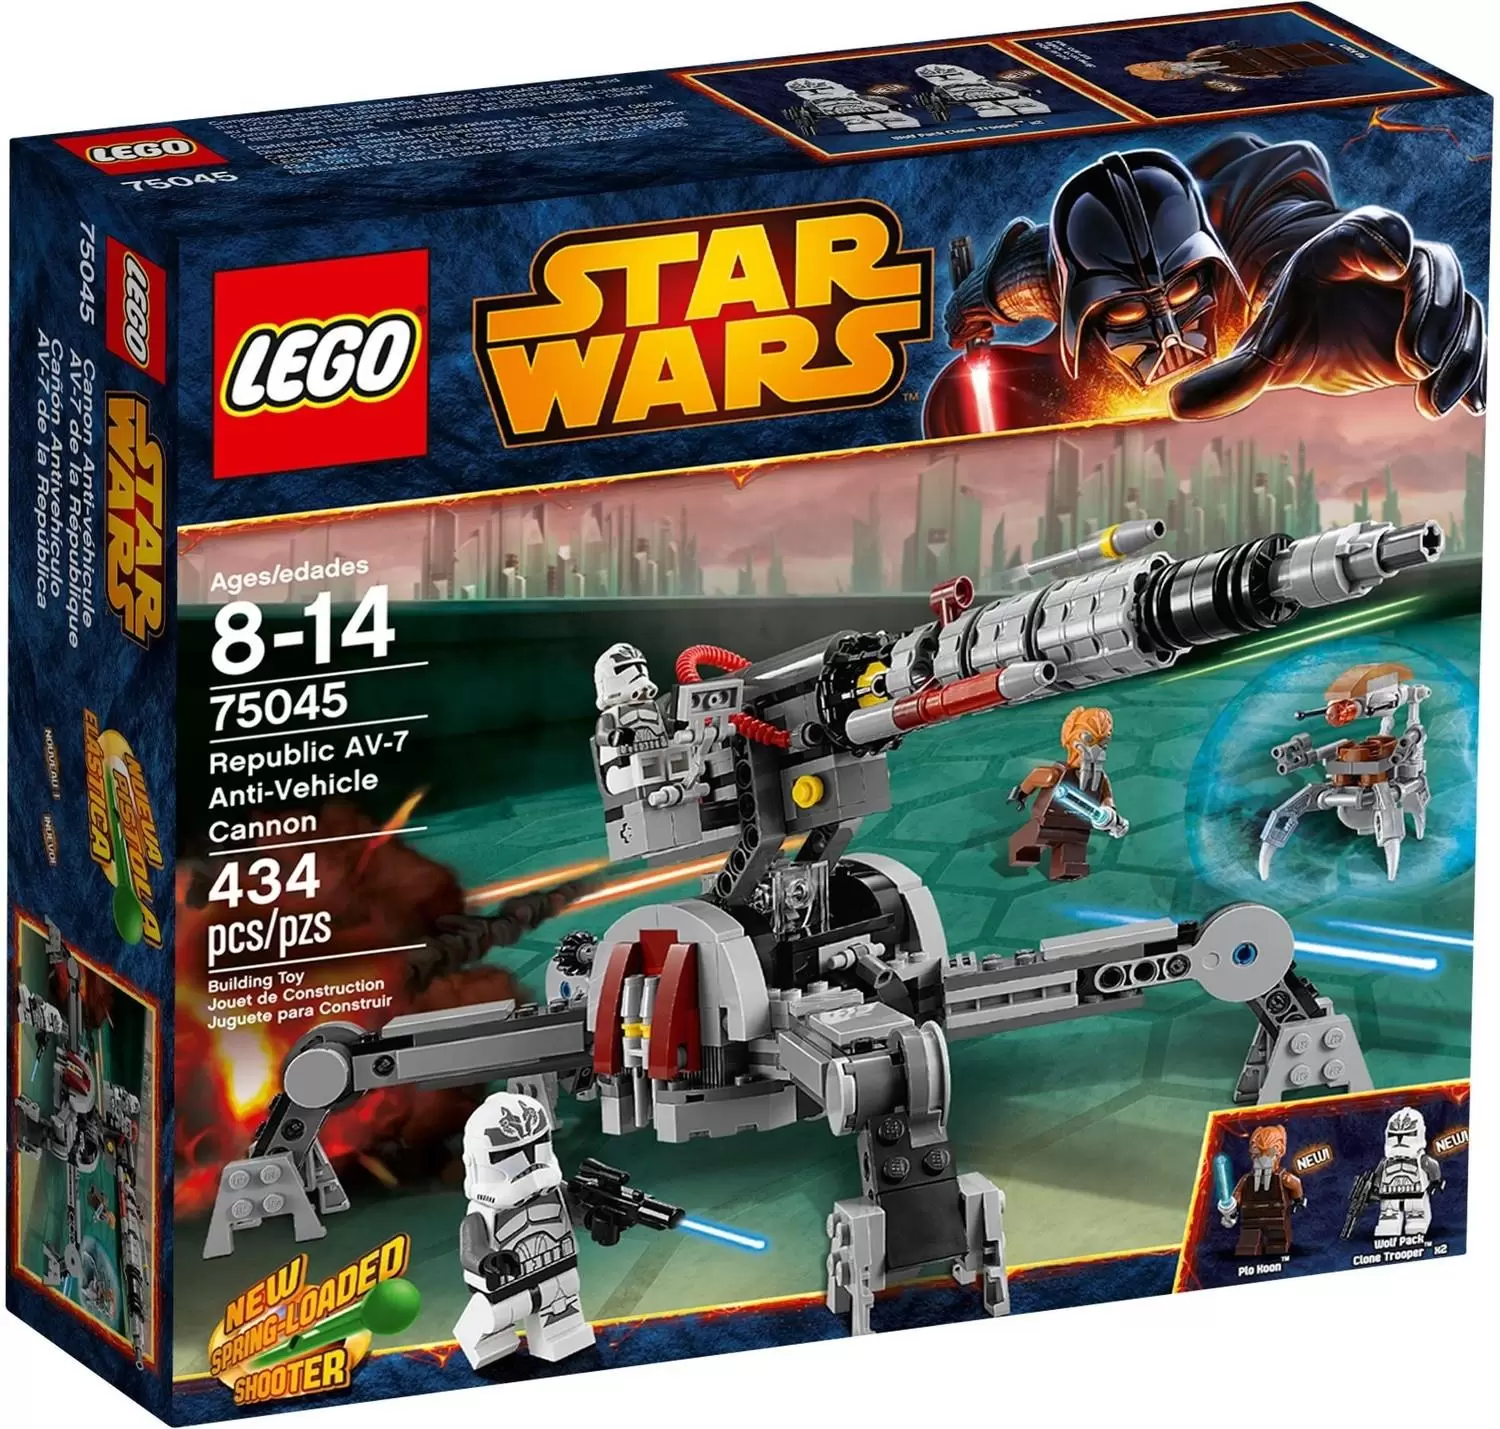 LEGO Star Wars - Republic AV-7 Anti-Vehicle Cannon